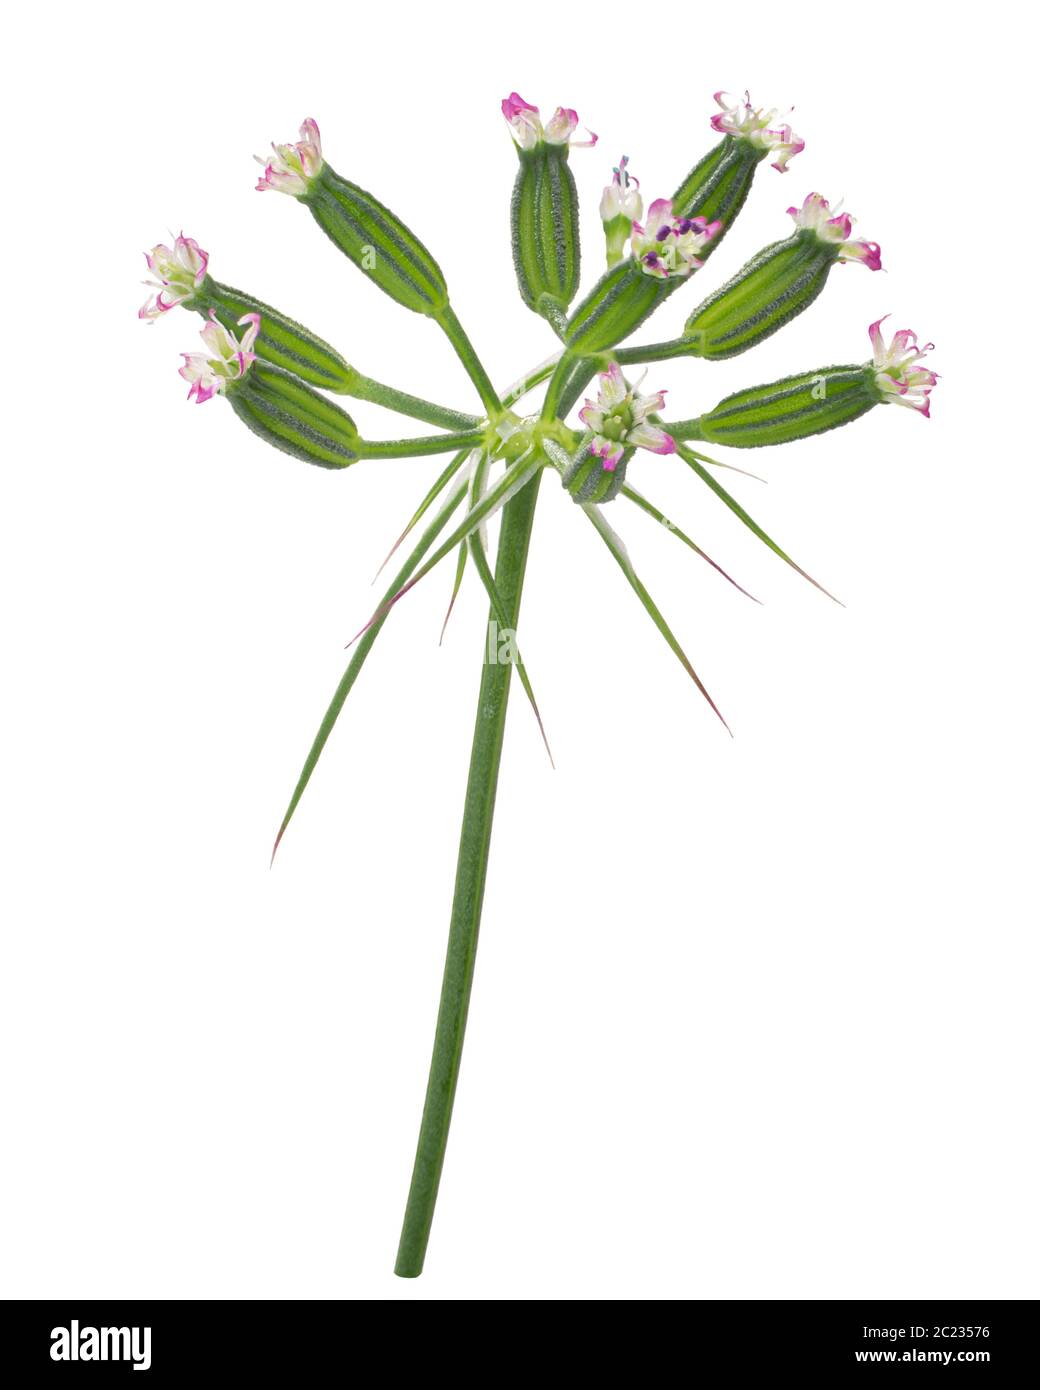 Cumin umbel (Cuminum cyminum) with blossoms, isolated Stock Photo